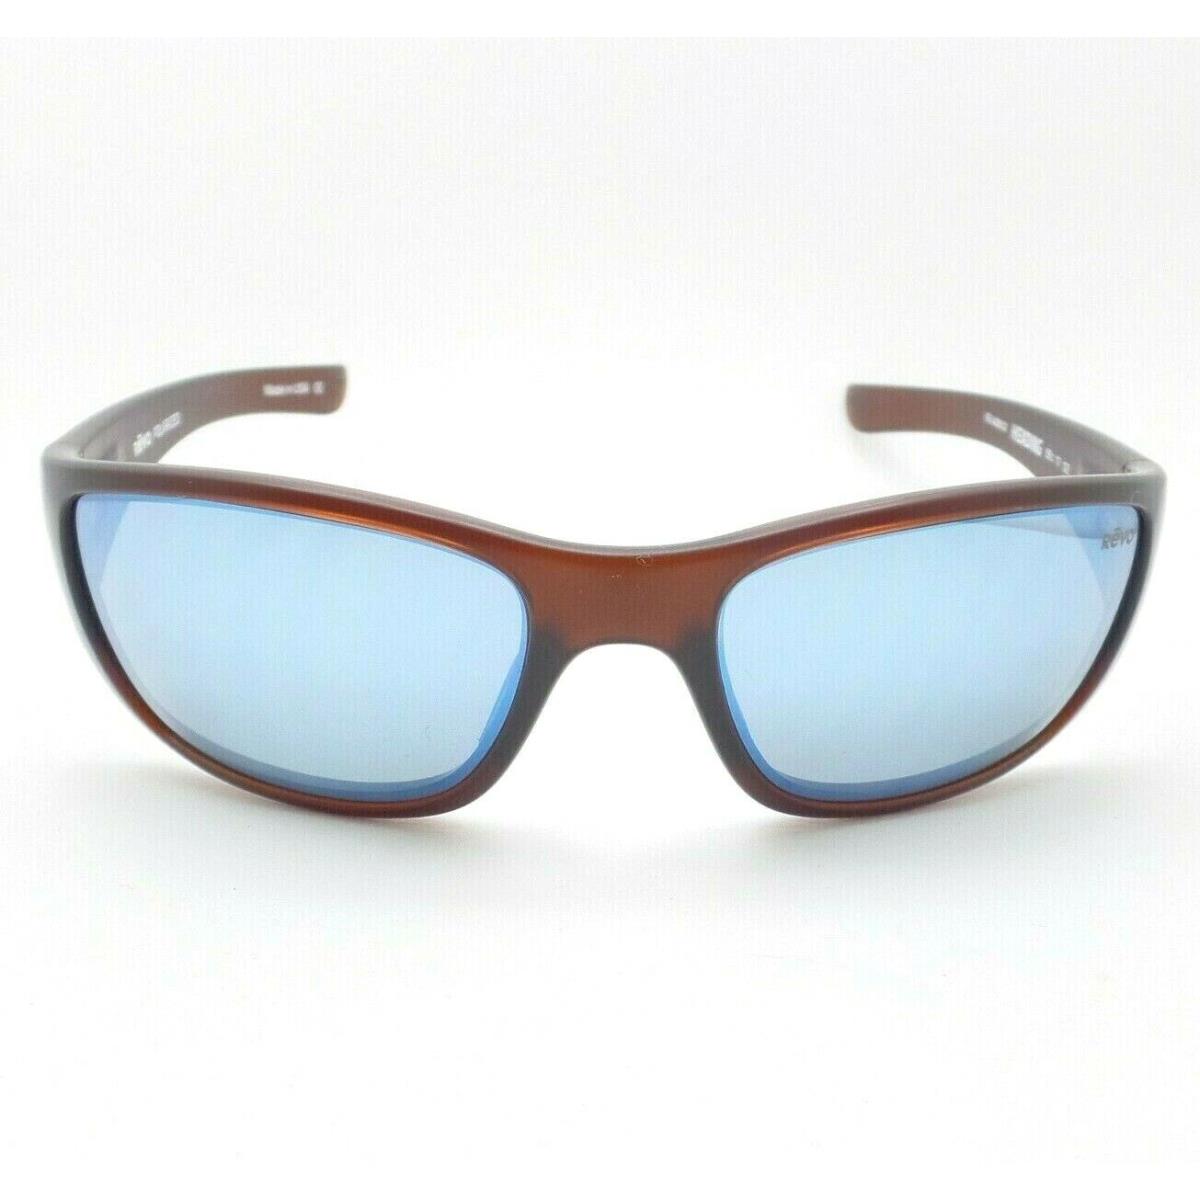 Revo sunglasses  - Matte Brown Frame, Blue Water Lens